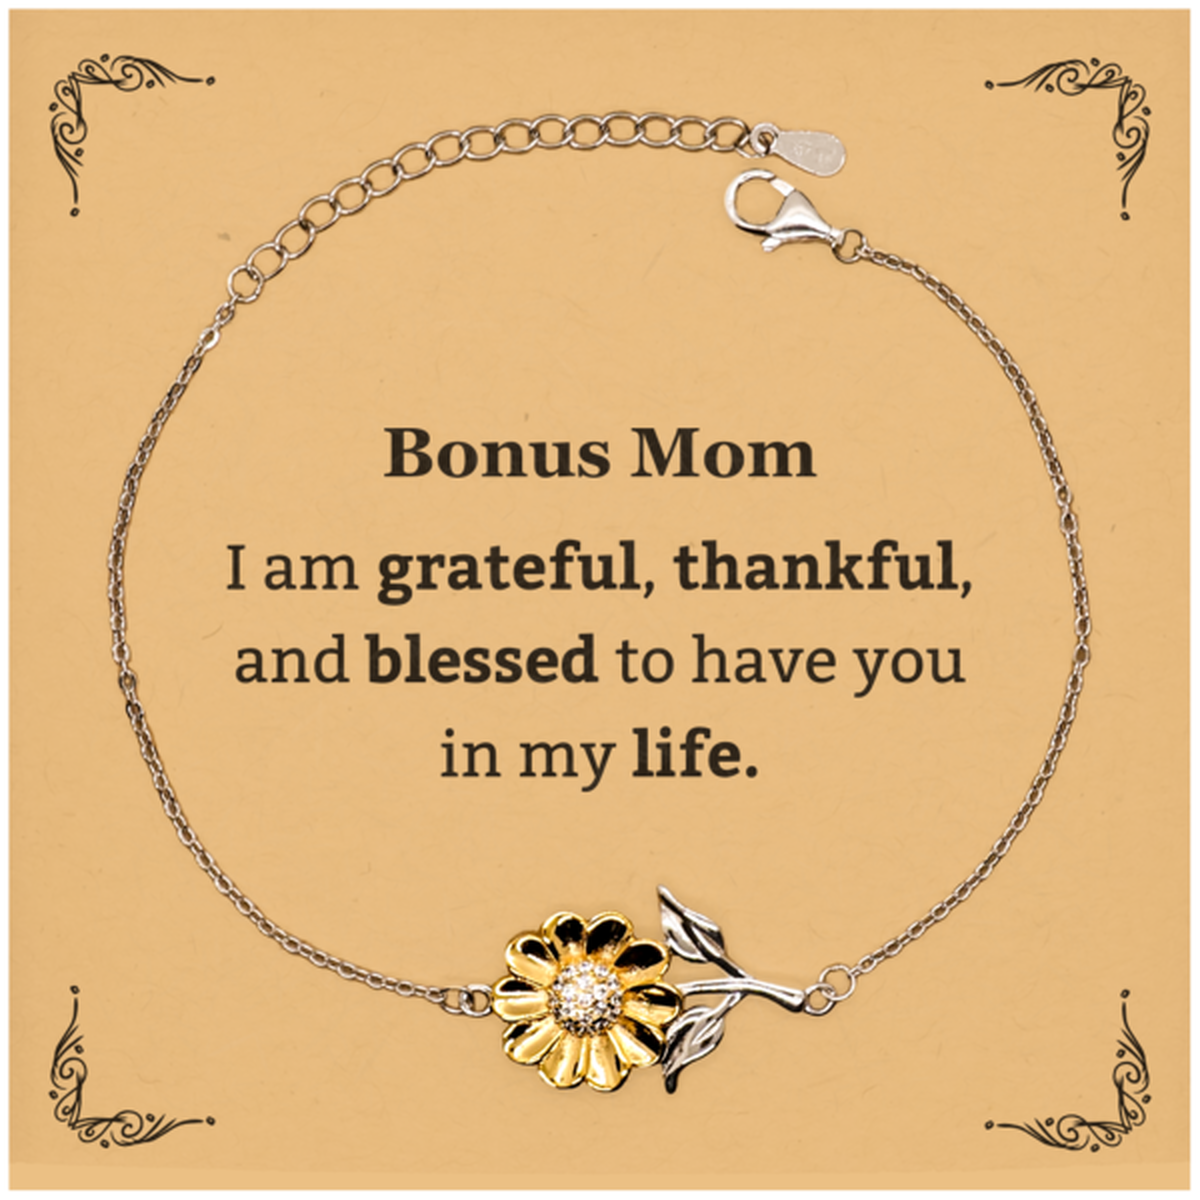 Bonus Mom Appreciation Gifts, I am grateful, thankful, and blessed, Thank You Sunflower Bracelet for Bonus Mom, Birthday Inspiration Gifts for Bonus Mom